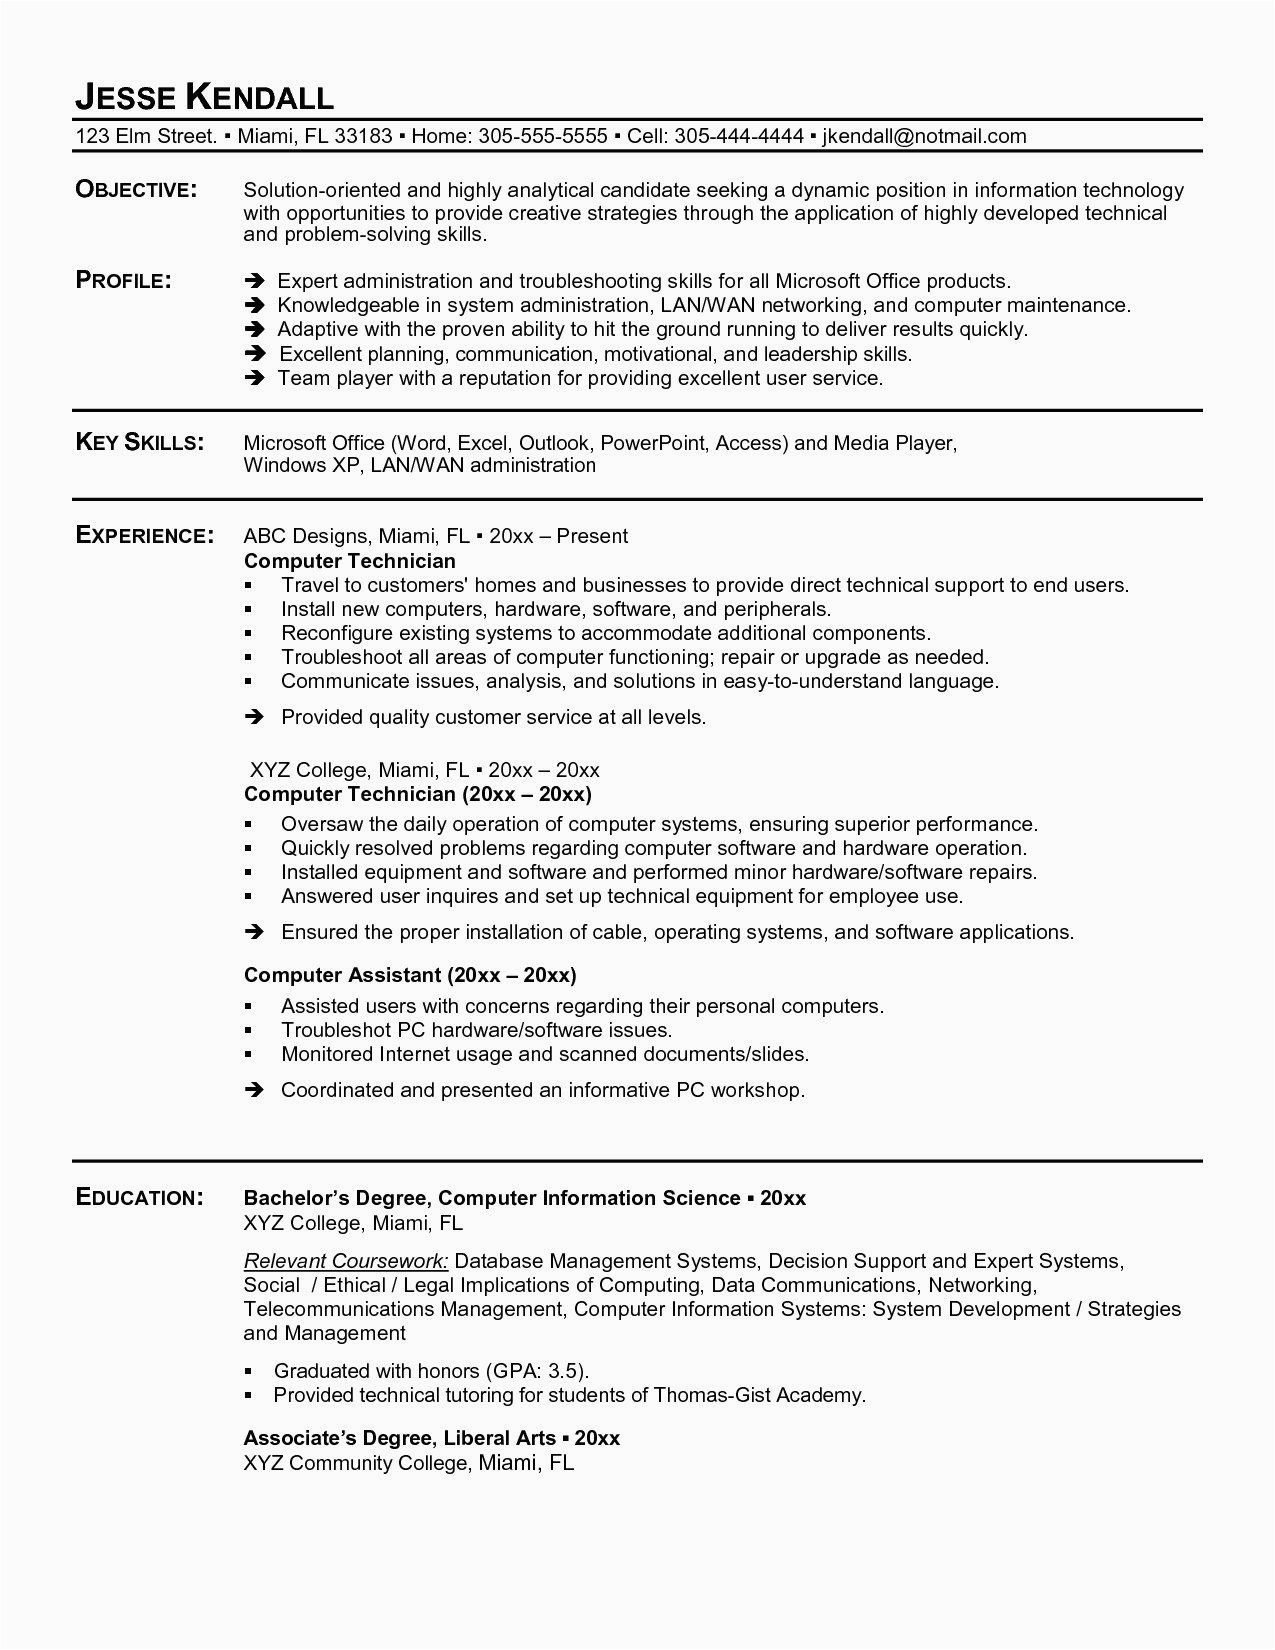 Sample Resume for Computer Repair Technician 30 Puter Technician Resume Skills